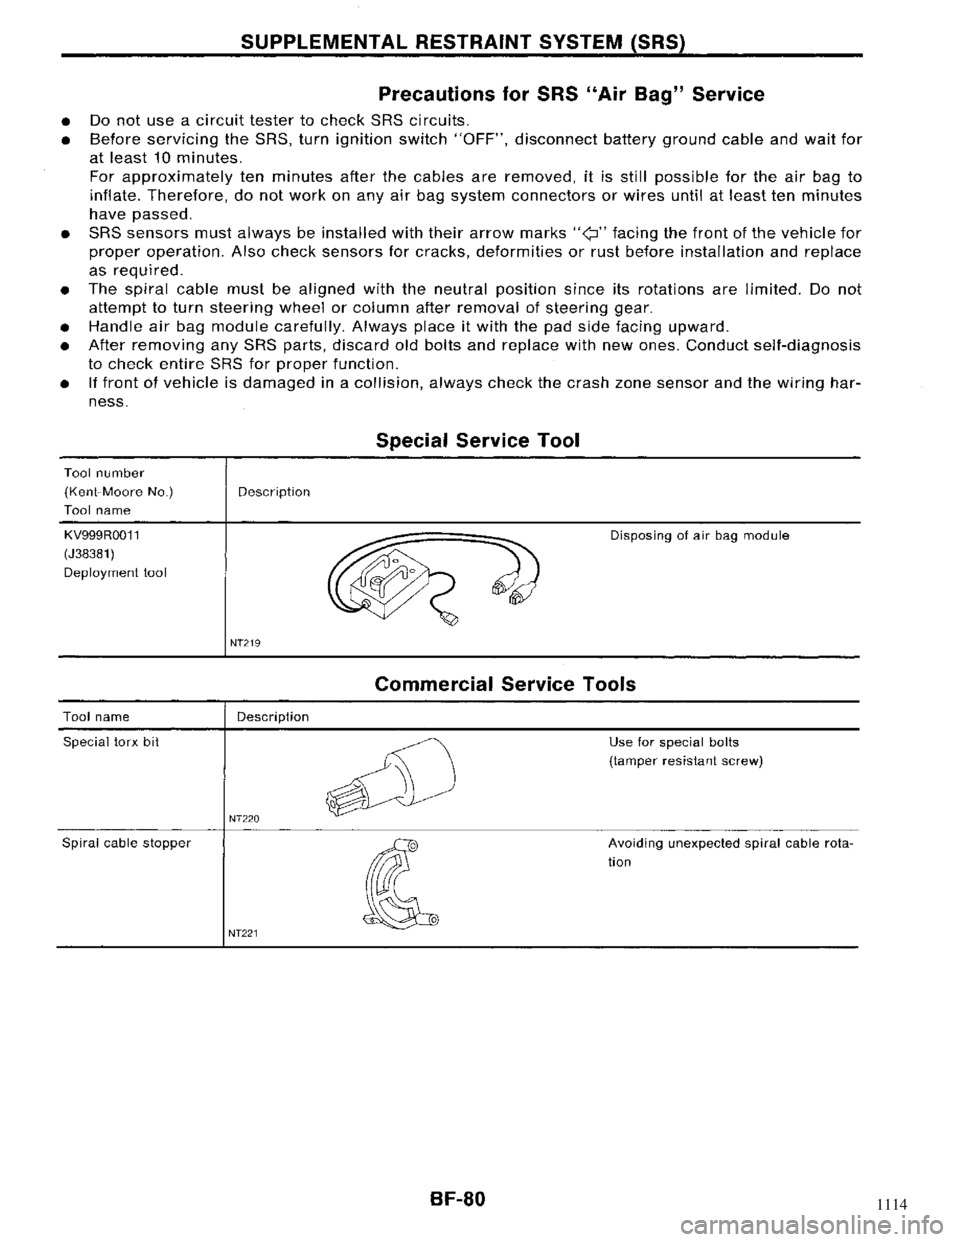 NISSAN MAXIMA 1994 A32 / 4.G Body Manual PDF 1114 